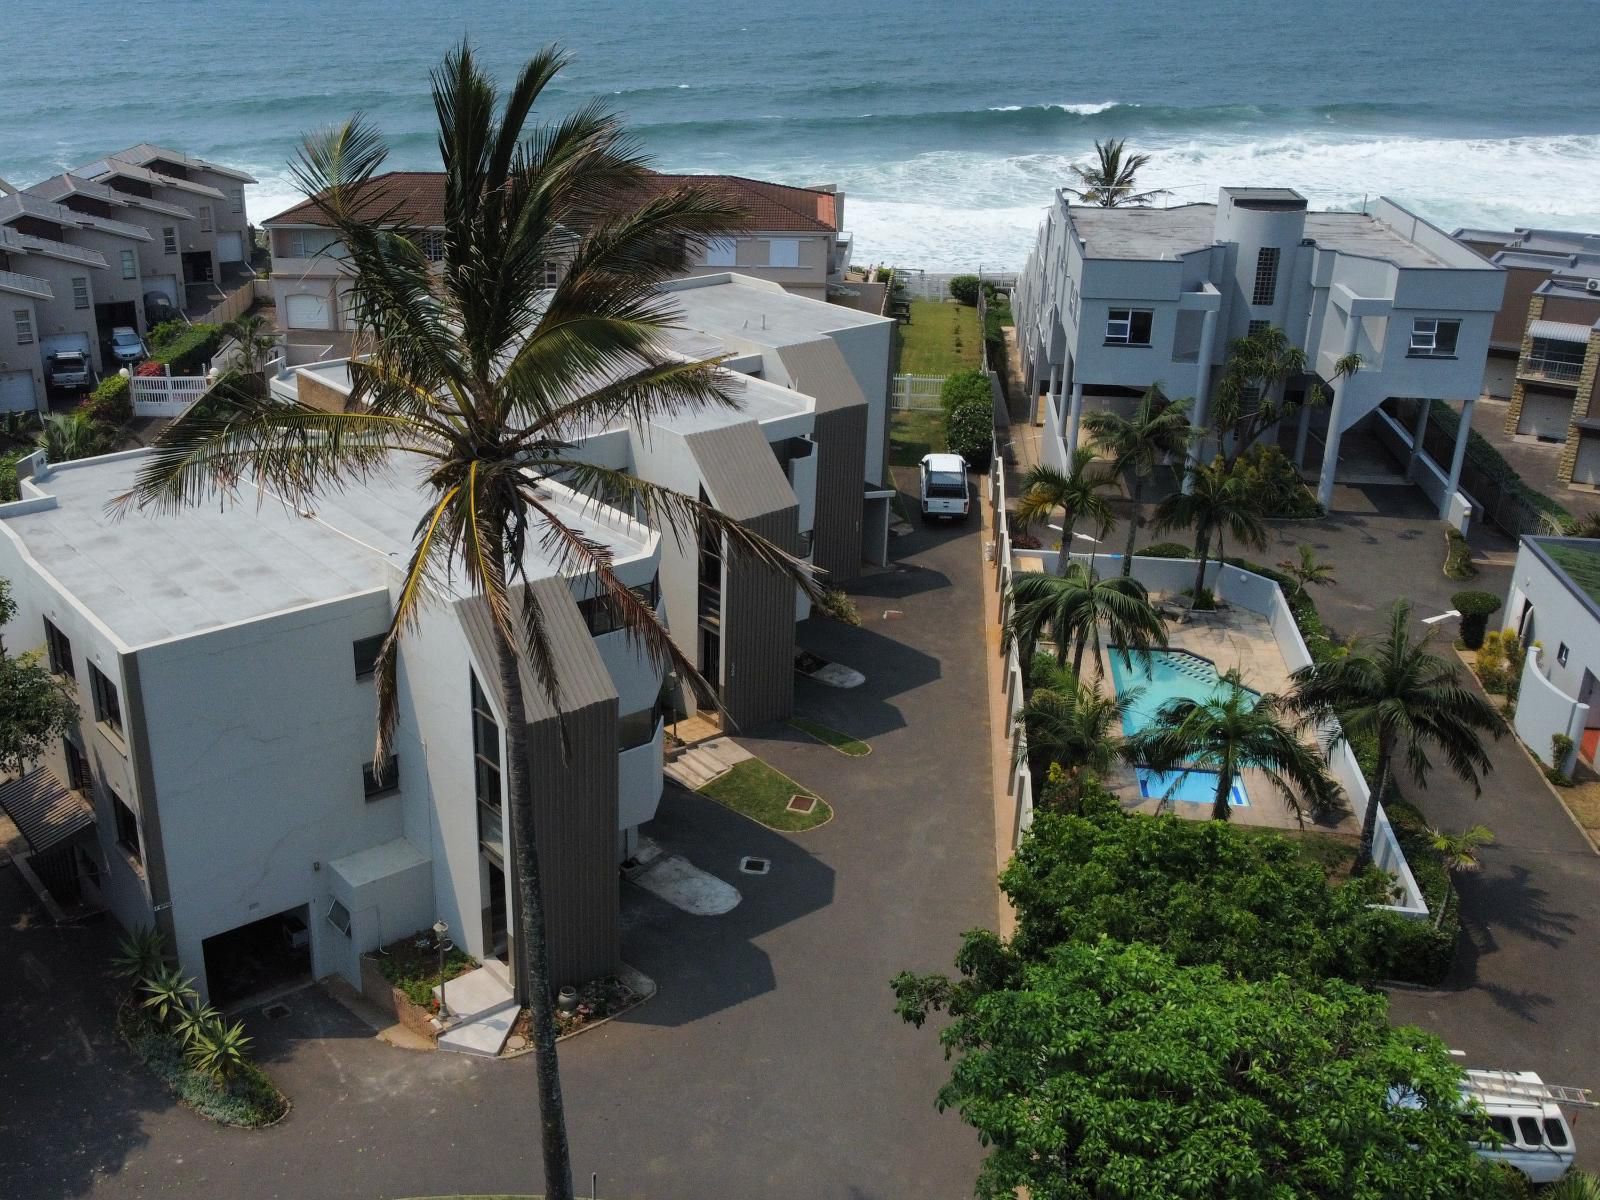 Labori Ballito Ballito Kwazulu Natal South Africa Beach, Nature, Sand, House, Building, Architecture, Palm Tree, Plant, Wood